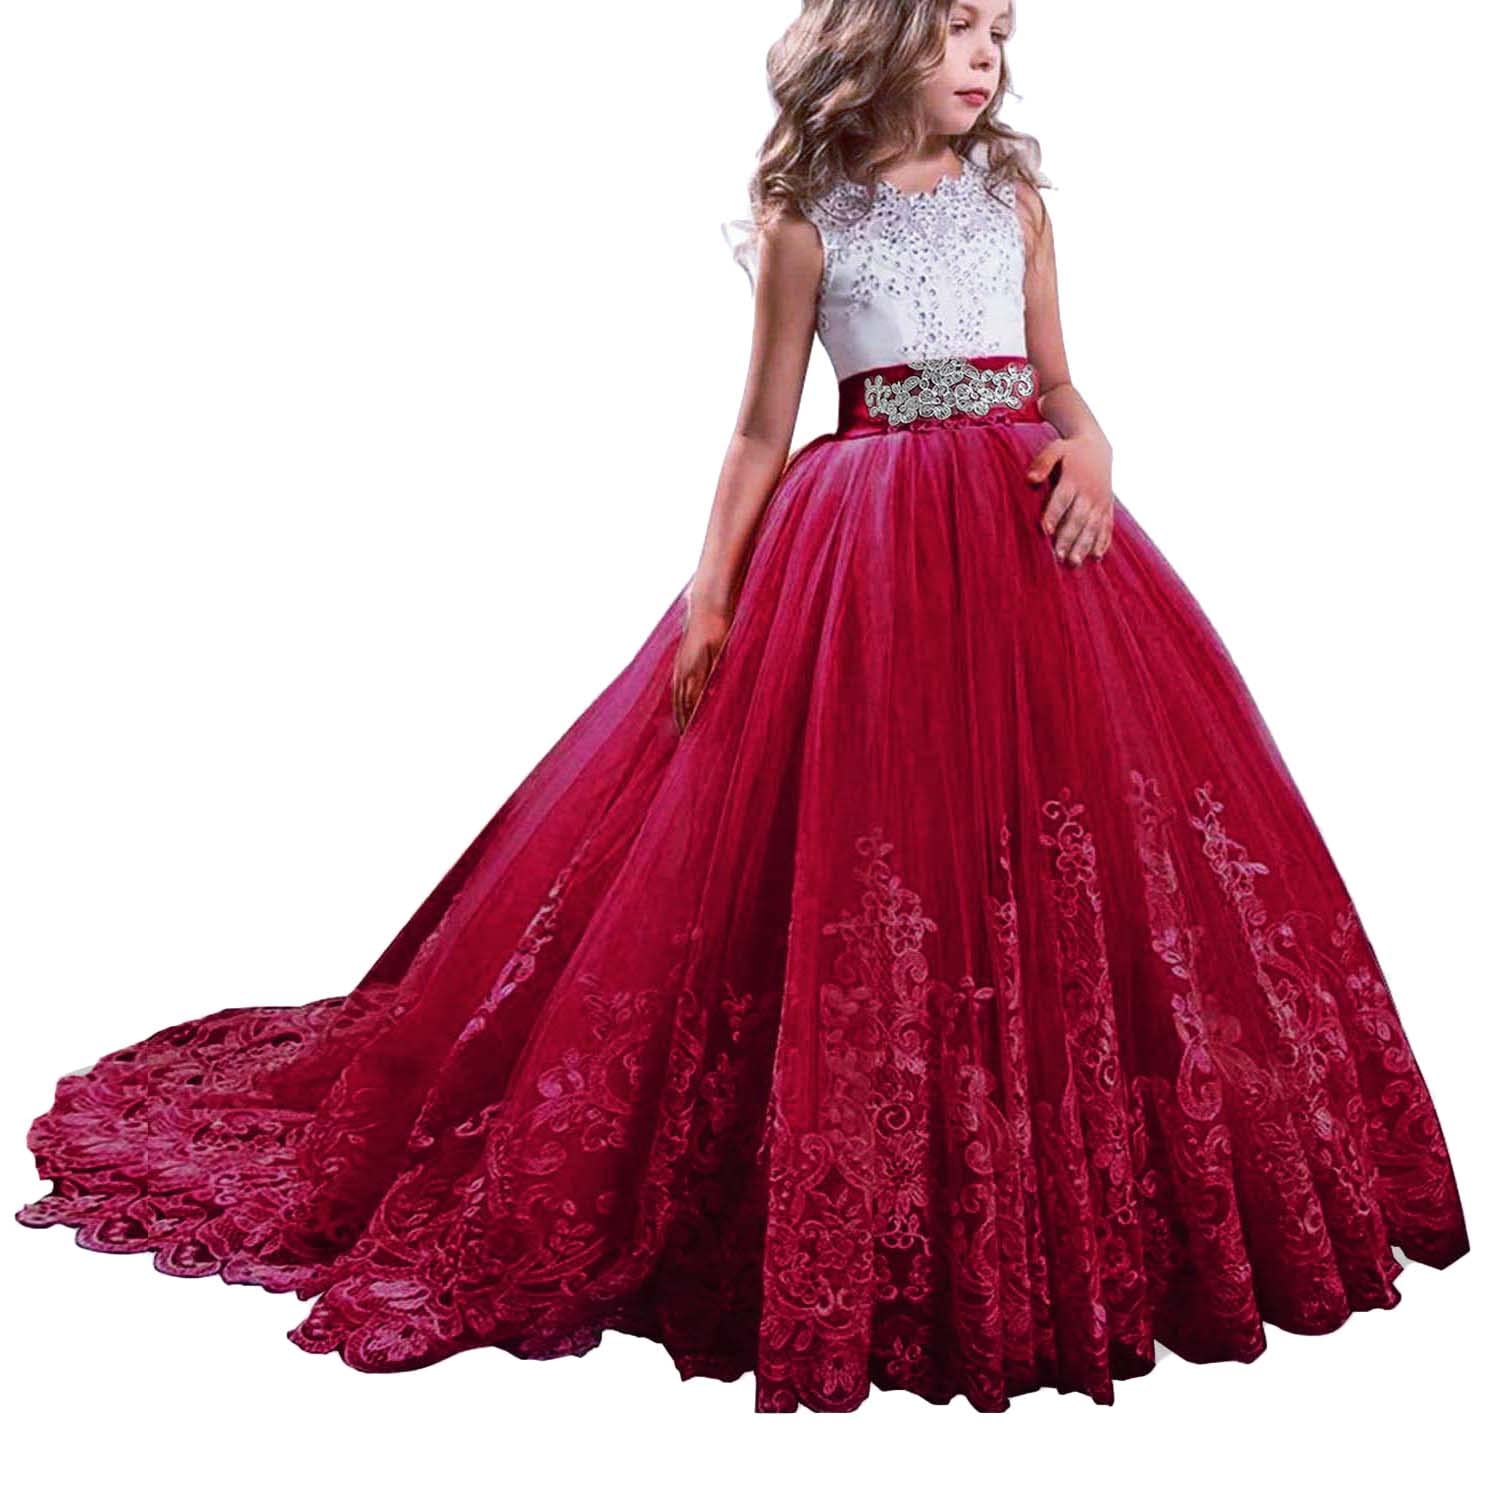 Girls Couture Dress - Luxury Princess Flower Girl Ball Gown